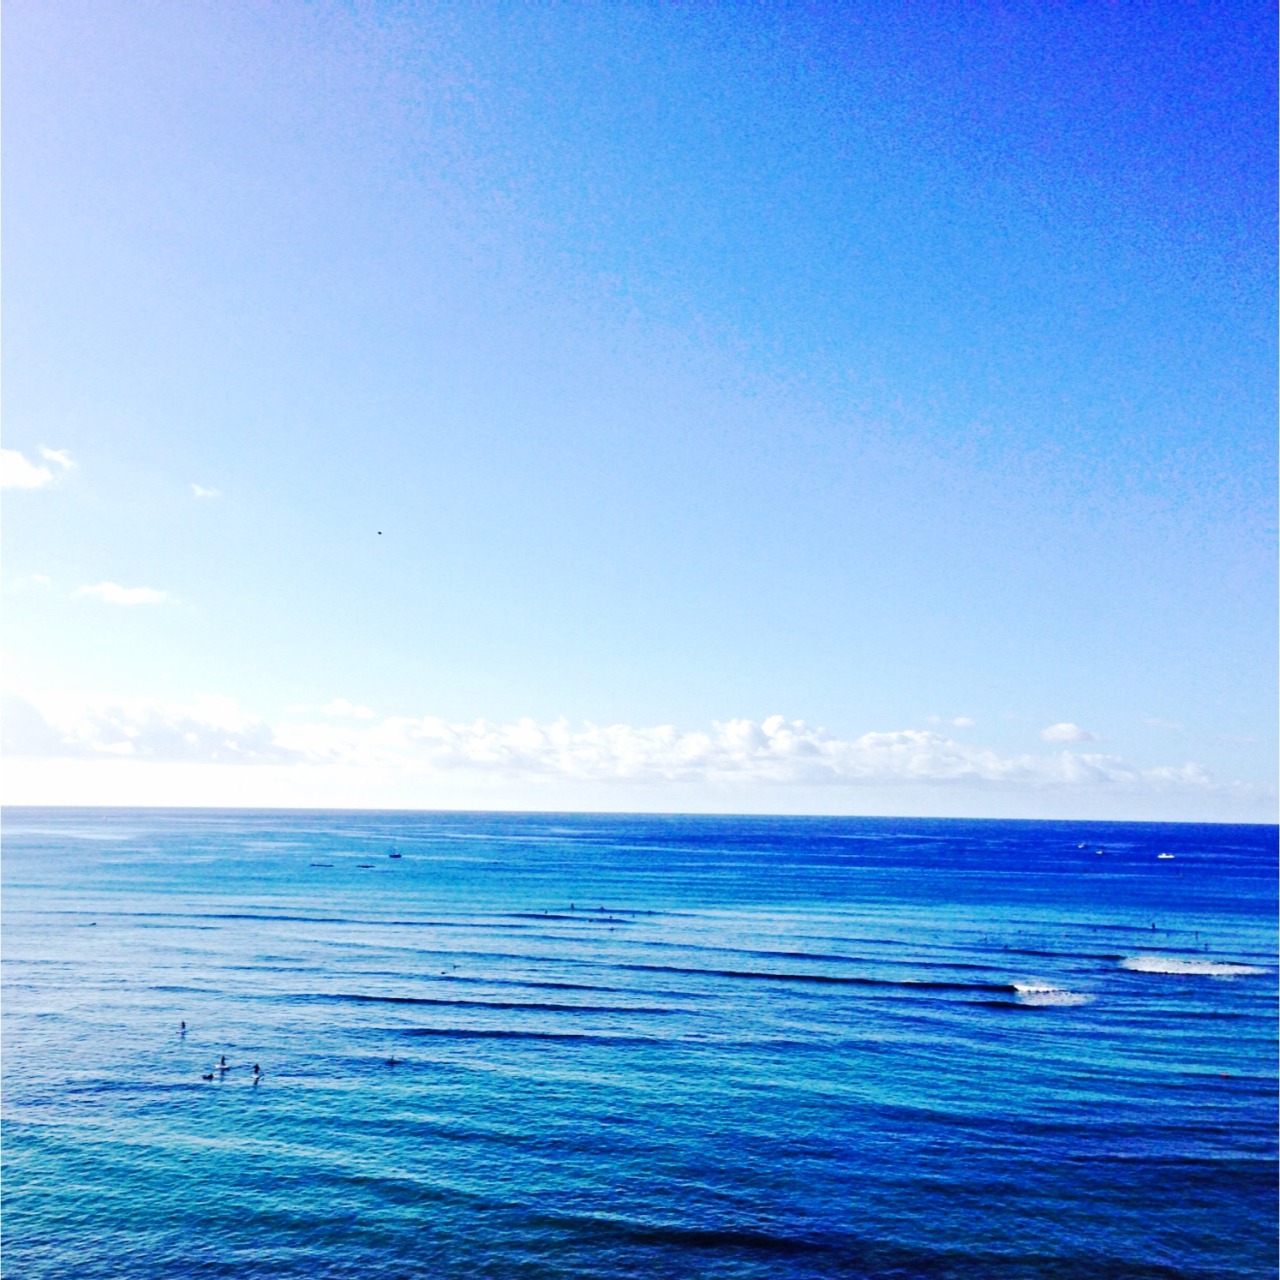 tropicalfury: solesa-л: IncaGold: прекрасный вид - Waikiki Shore Кондо, Гавайи. Instragram: @ bwithford ▴ △ Пляжи сук и все между ними △ ▴ 